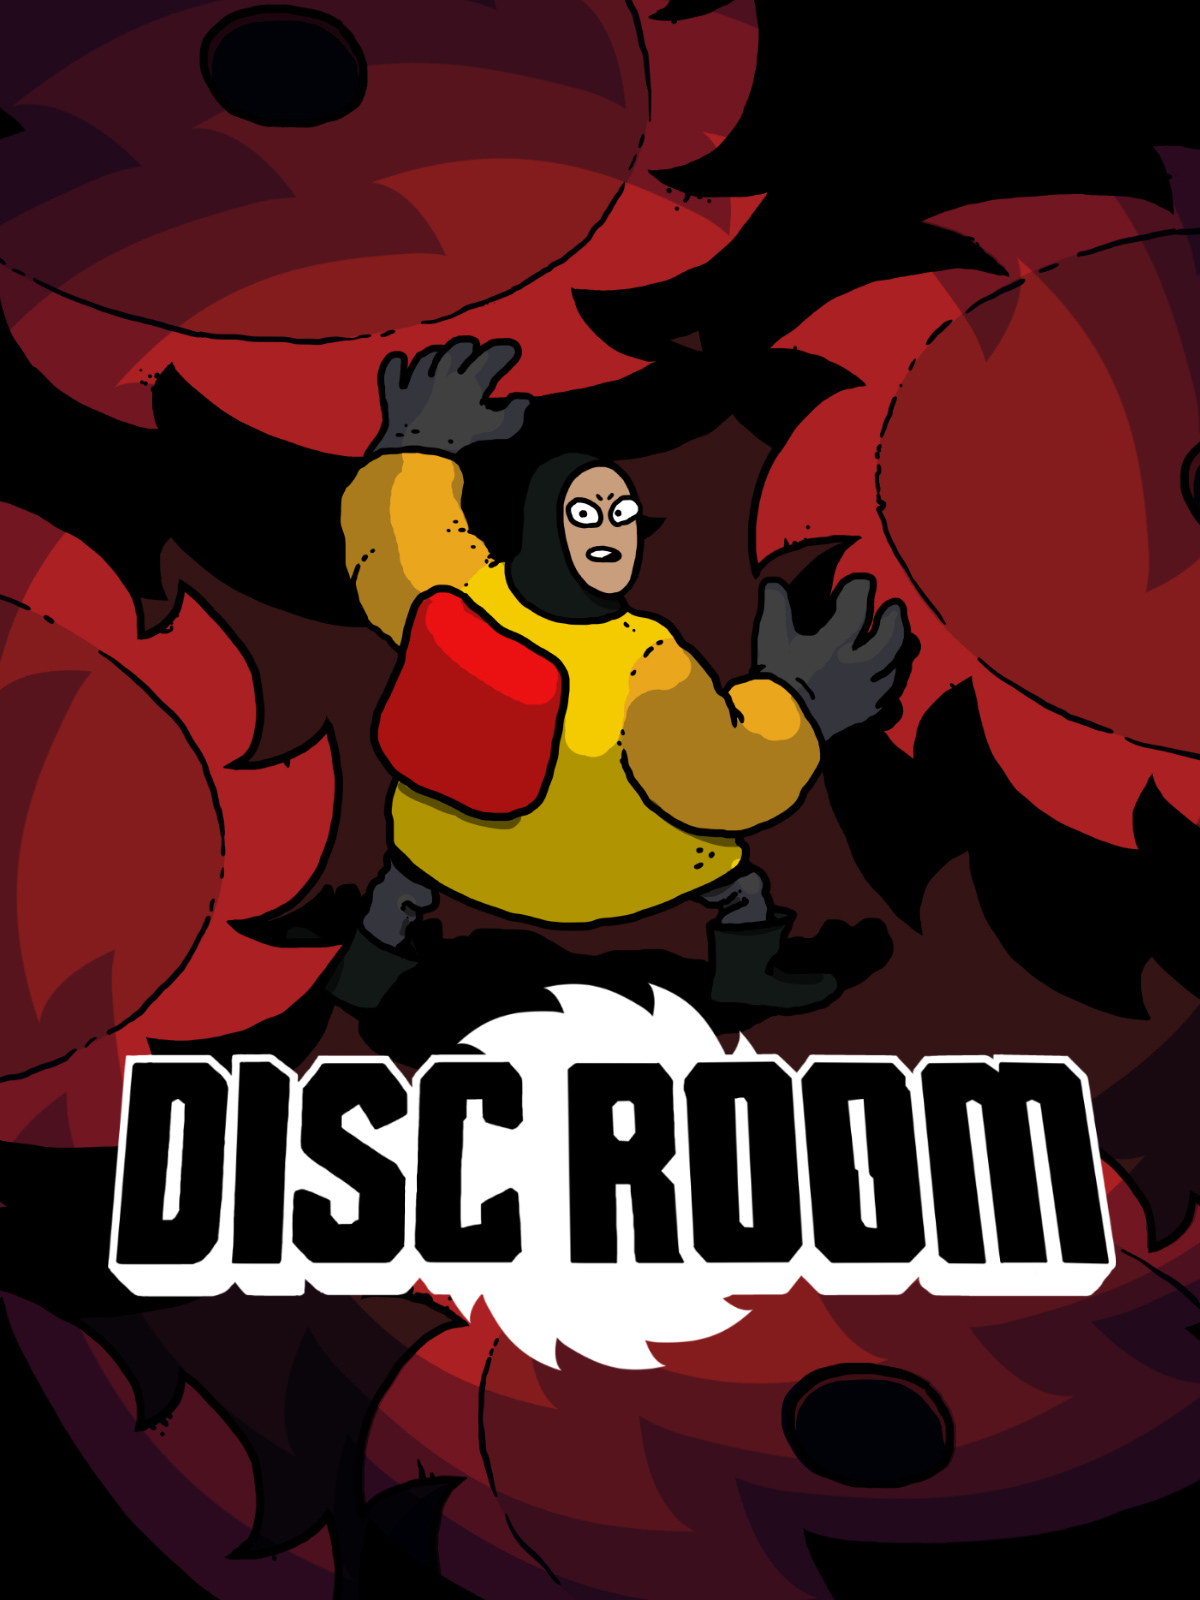 jaquette du jeu vidéo Disc Room